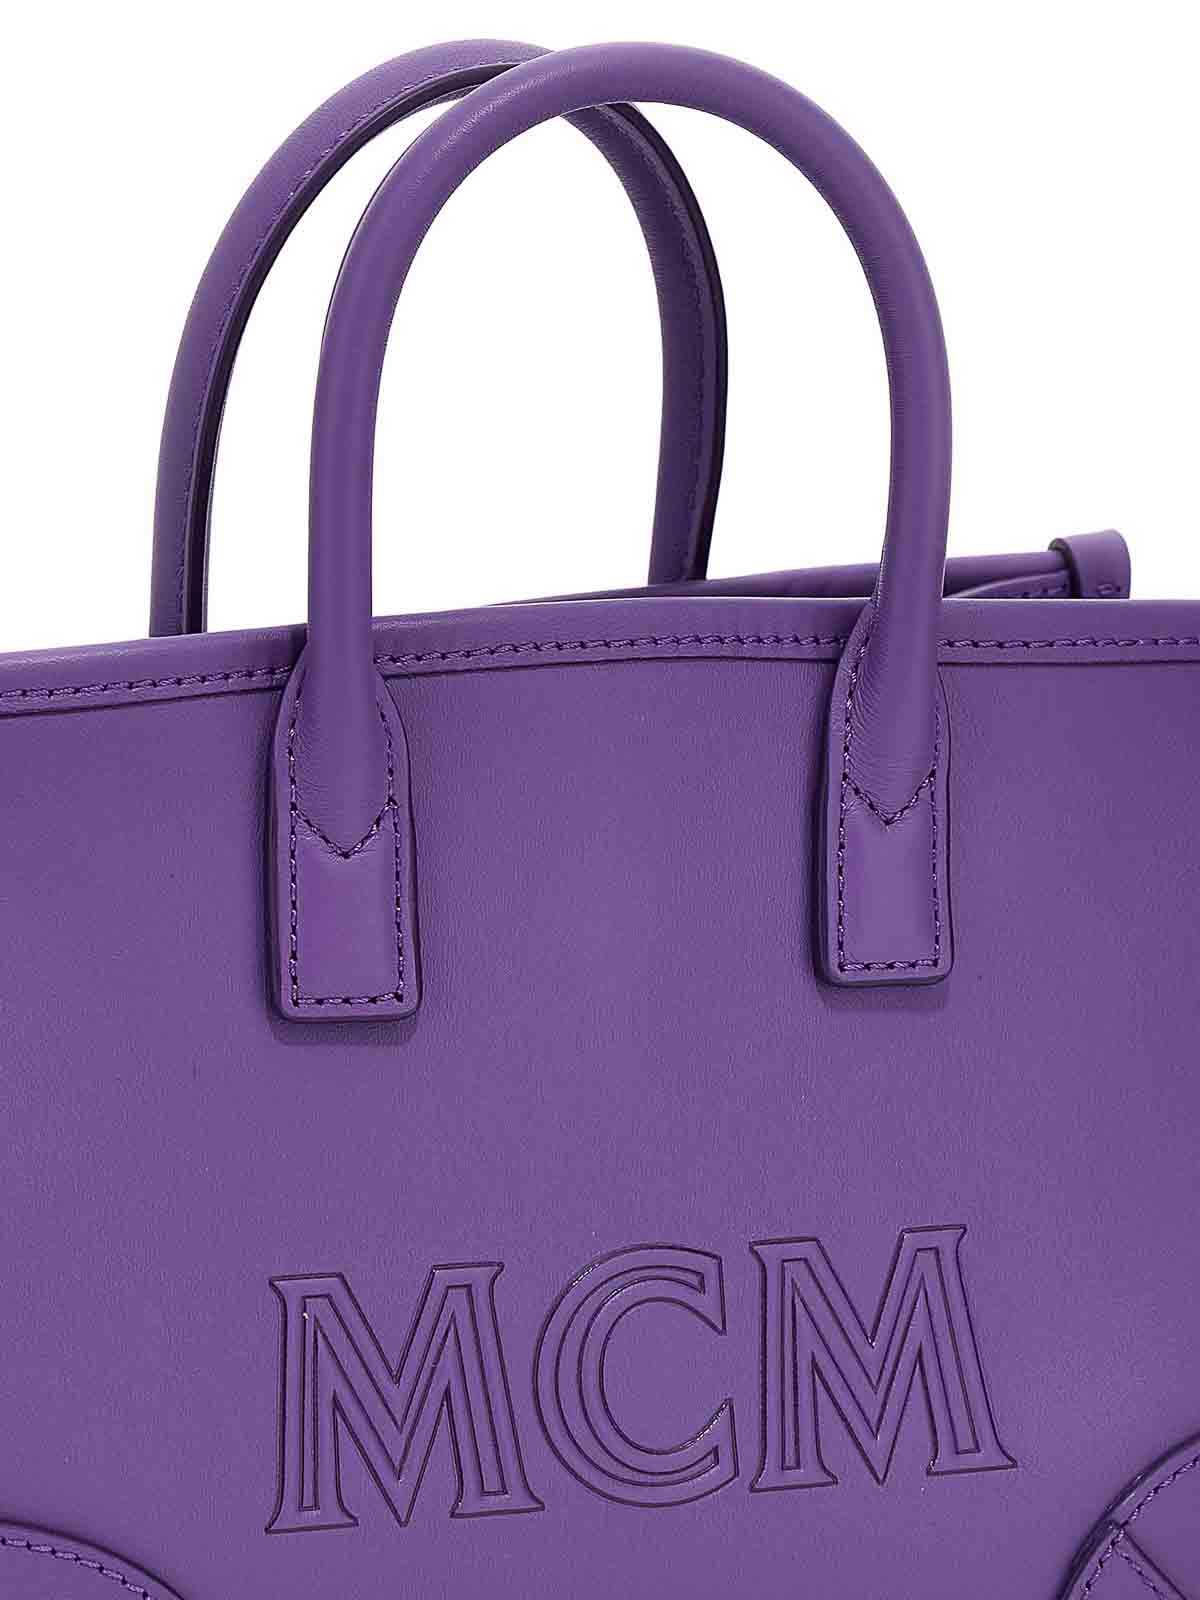 MCM Small Munchen Denim Tote Bag - Farfetch